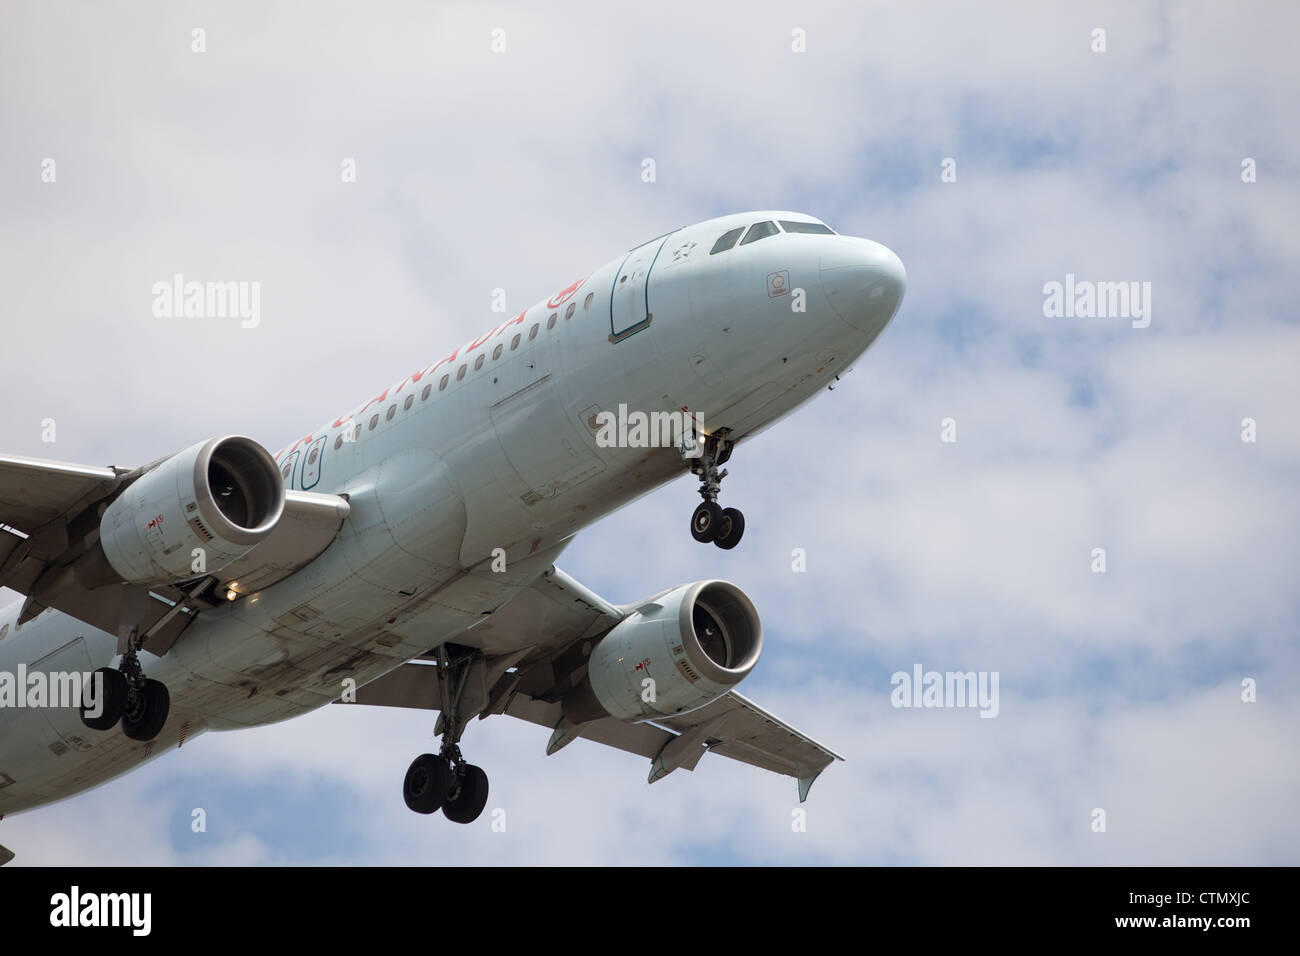 Air Canada Airbus 320 Landing at Pearson Airport, Toronto, Canada Stock Photo